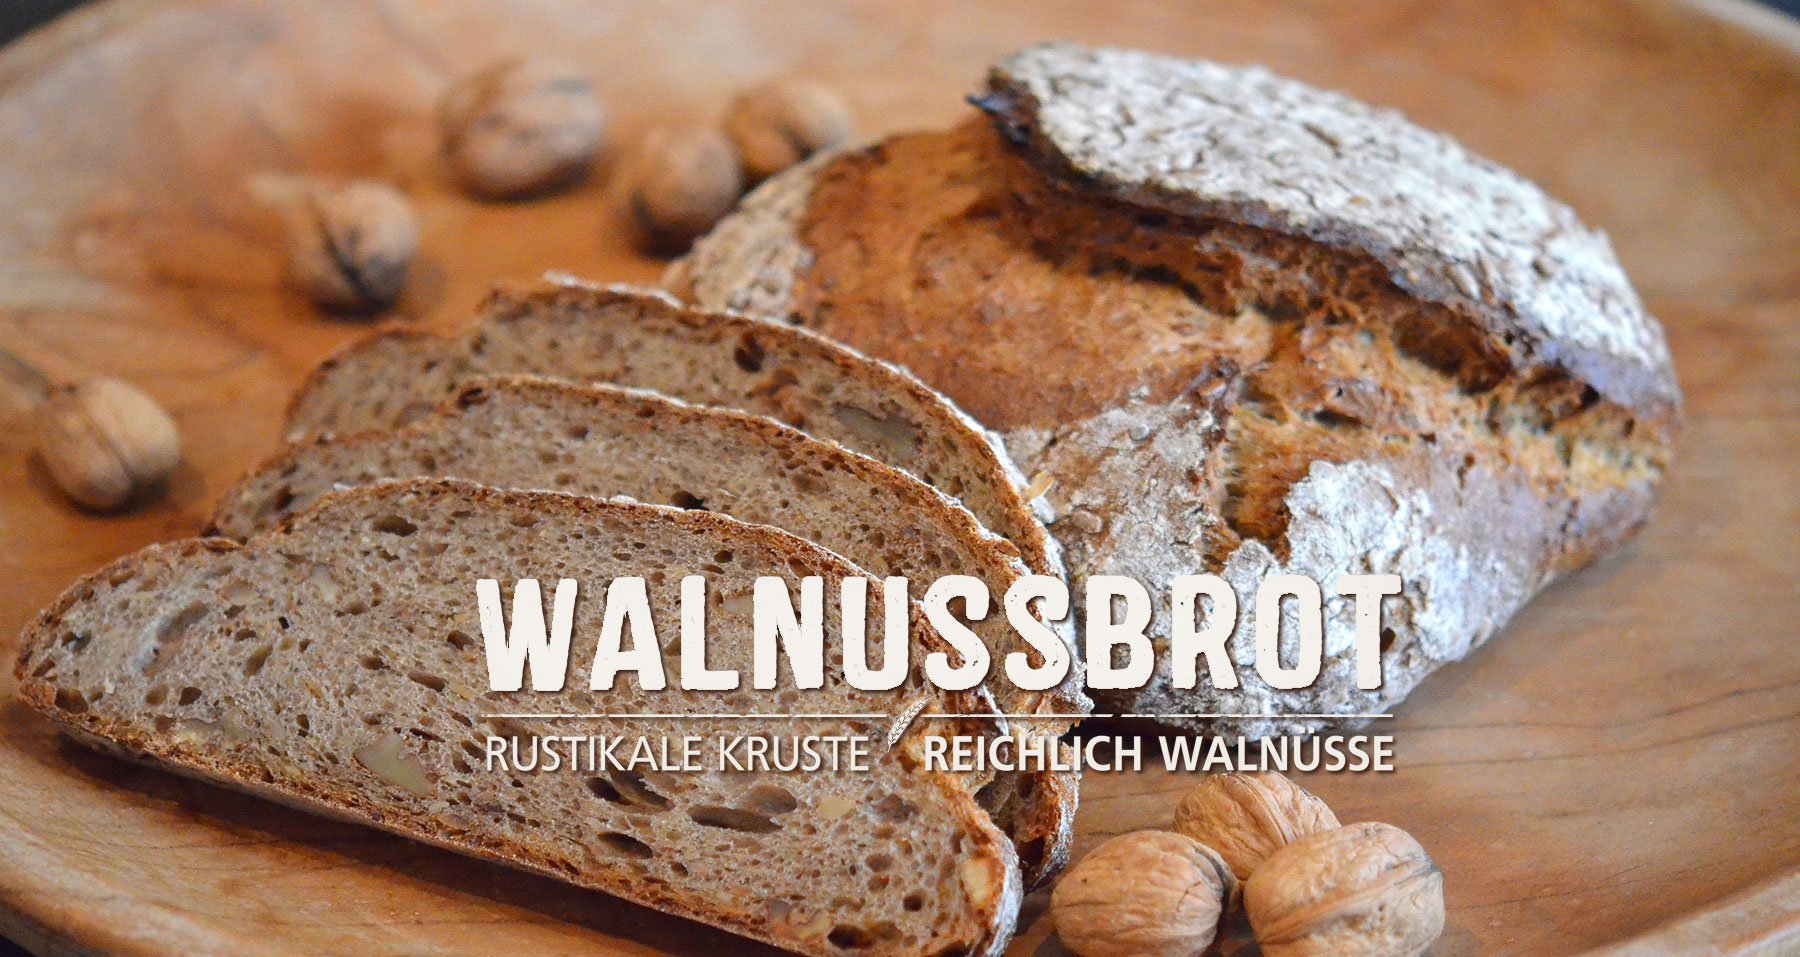 Walnussbrot, Rustikale Kruste, Reichlich Walnüsse